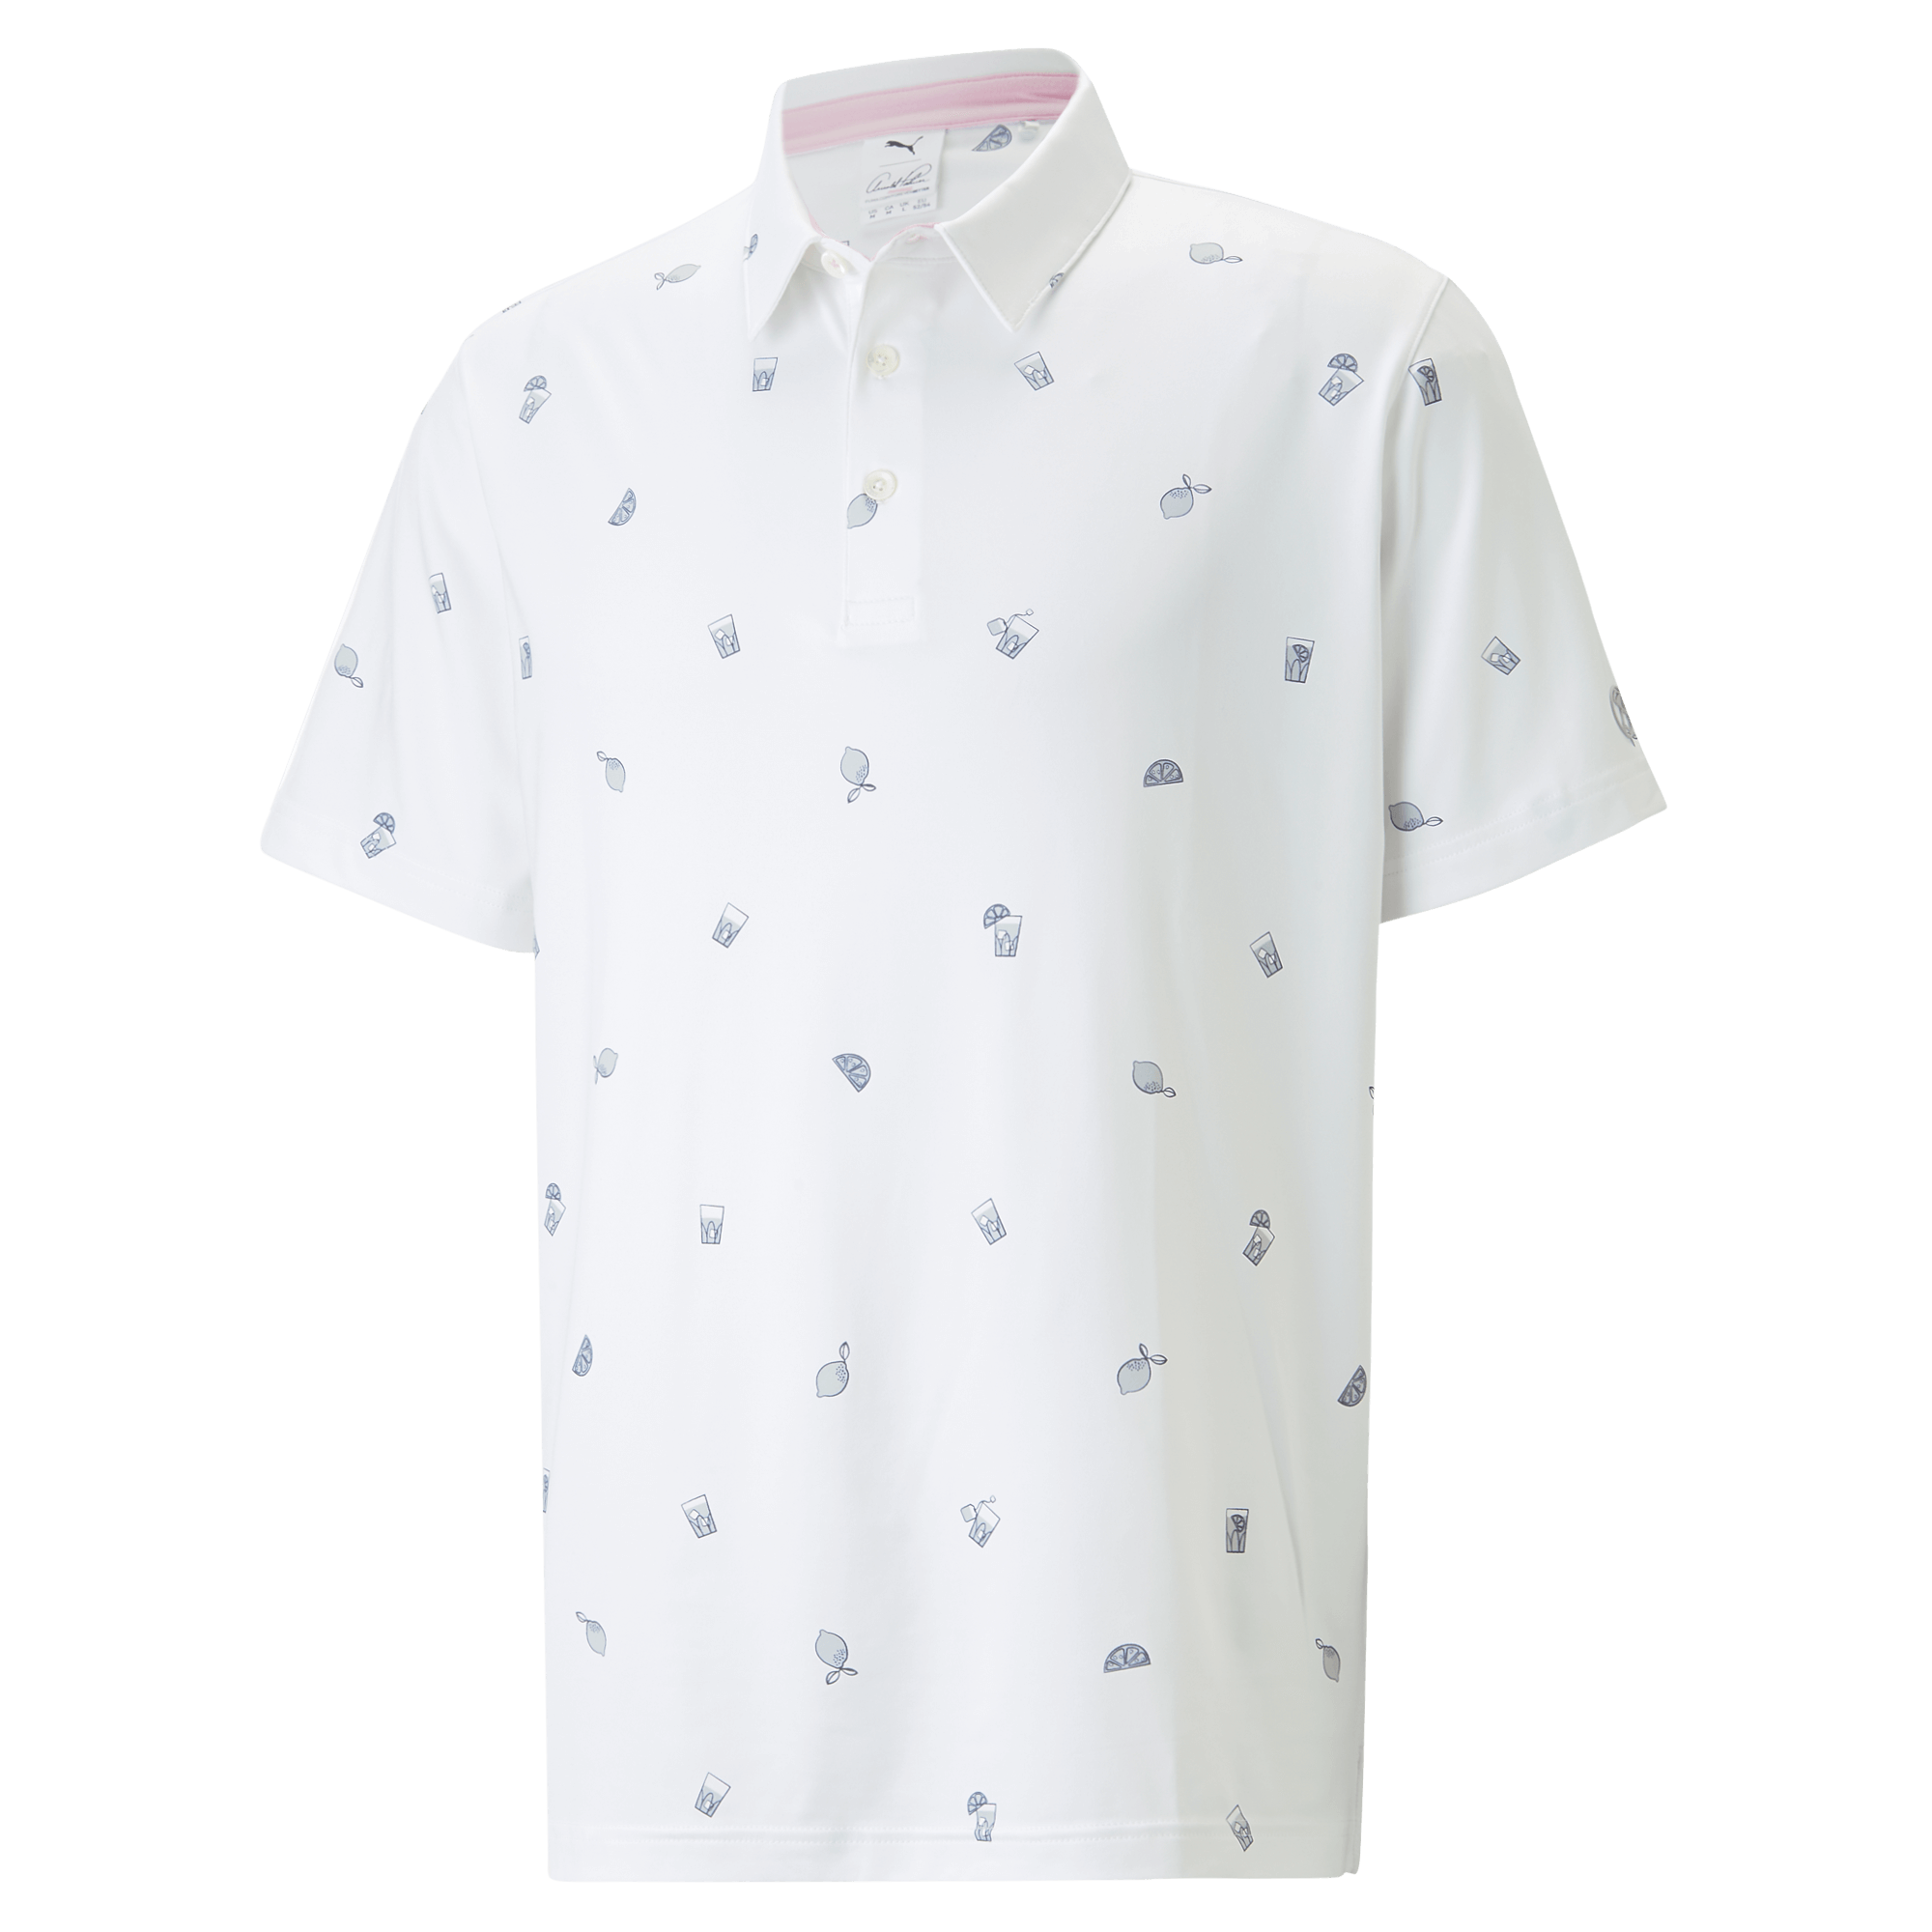 PUMA x Arnold Palmer Cloudspun Citrus Golf Polo Shirt